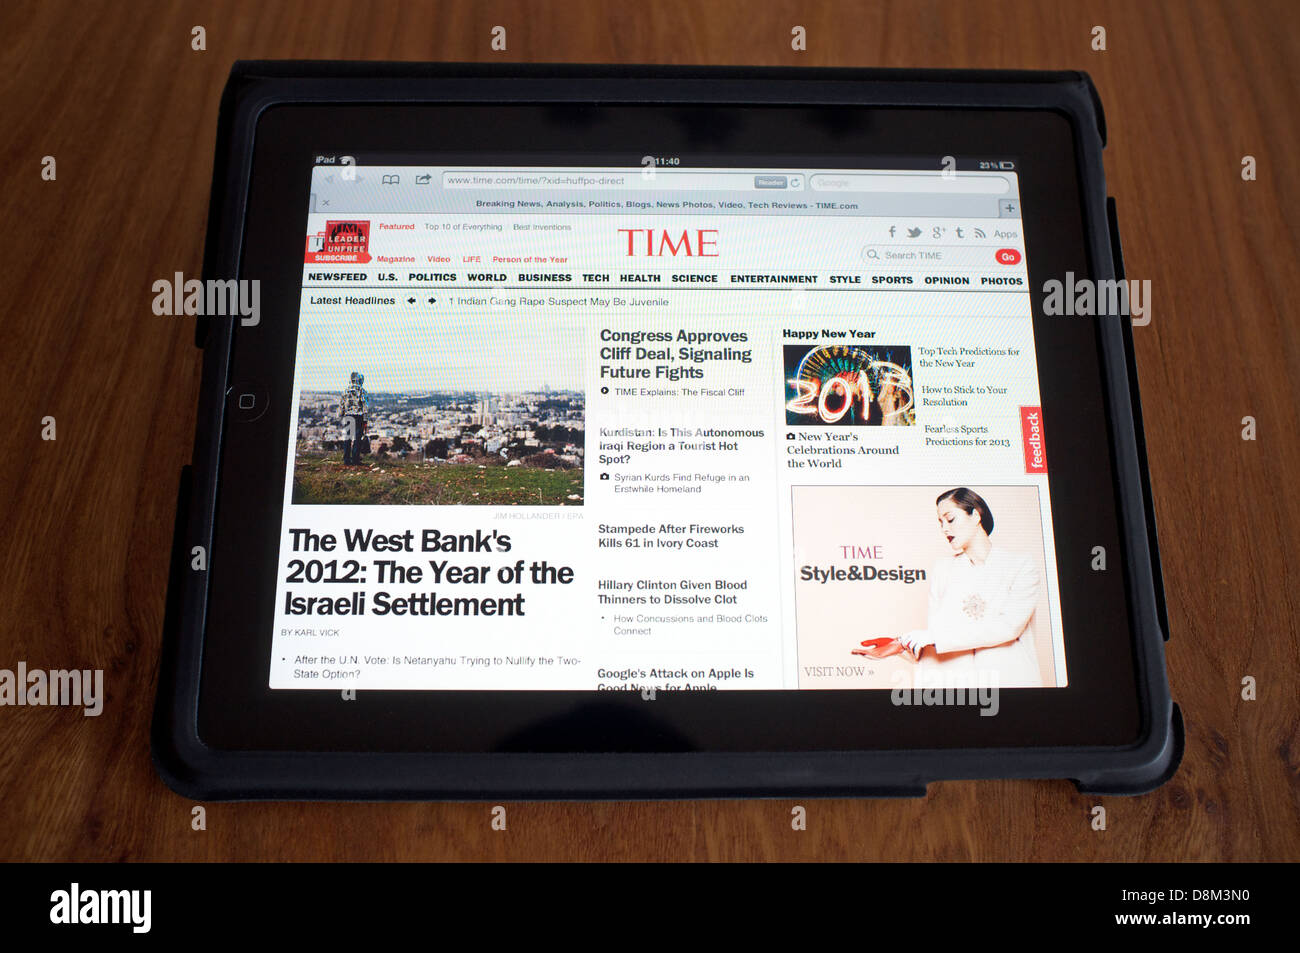 Time magazine electronic edition displayed on an Apple iPad Stock Photo